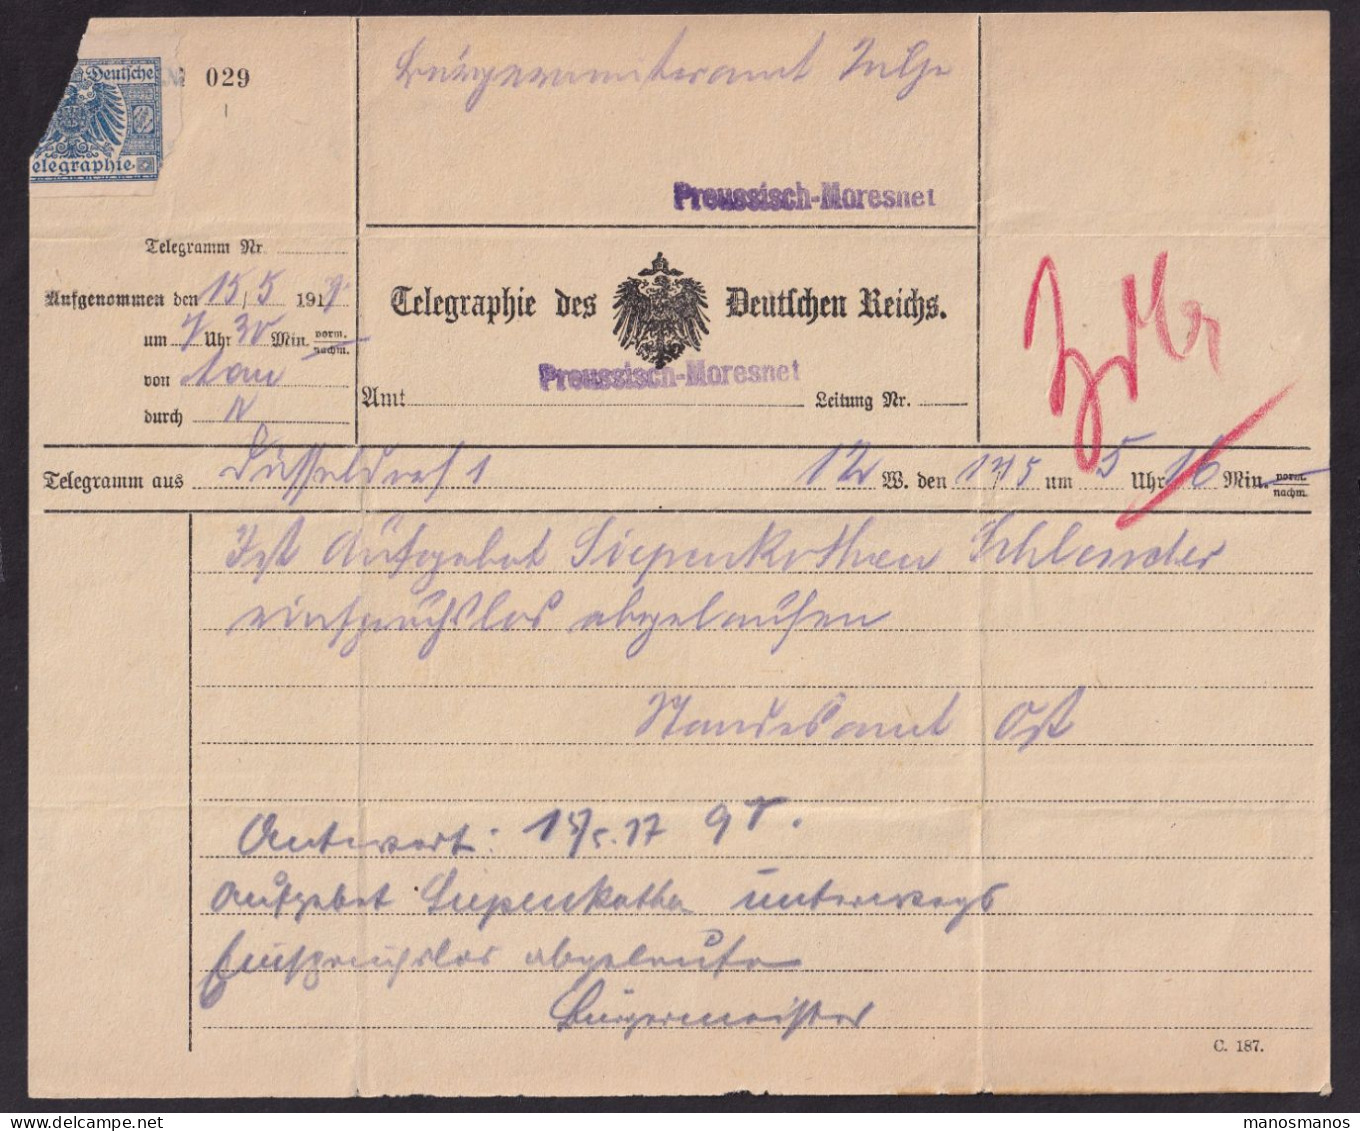 186/39 - CANTONS DE L'EST - Télégramme Deutsches Reich 1917, Vers PREUSSISCH MORESNET - RARE Griffe Violette - Telegrammen